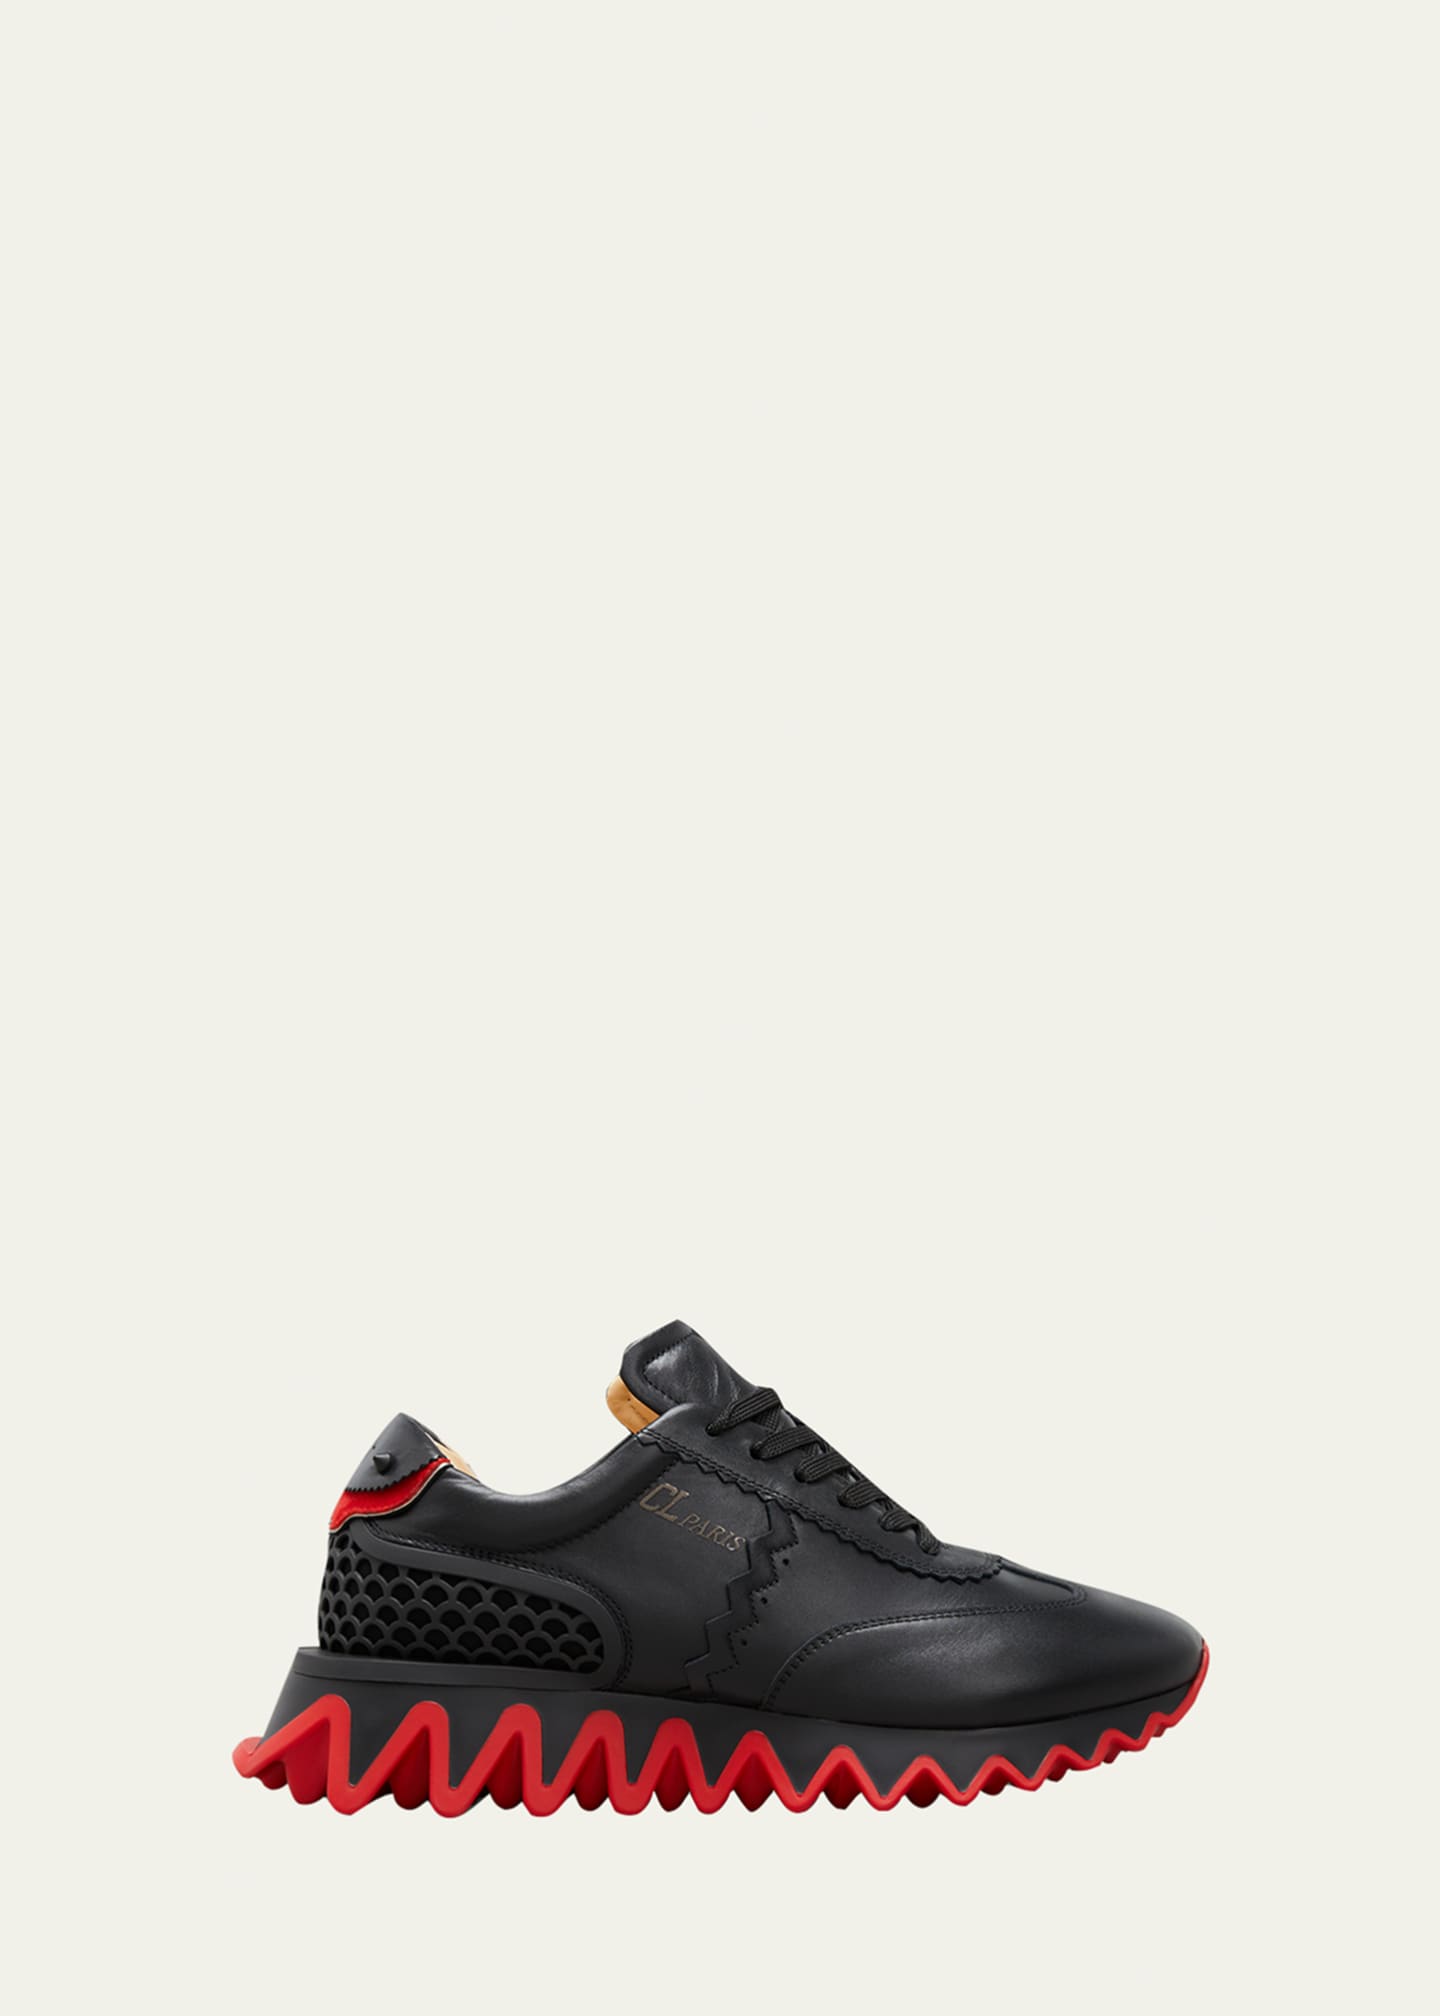 Louboutin Men's Flat Leather Runner Sneakers - Goodman